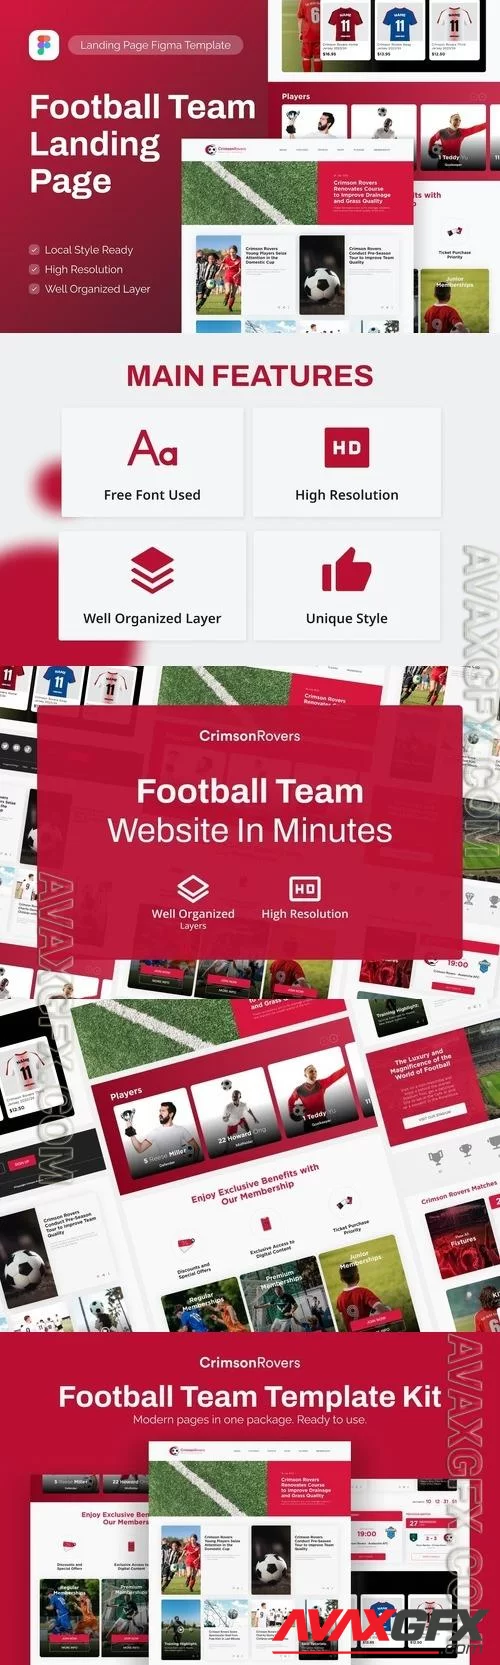 Crimson Rovers - Football Team Landing Page Figma 9HMACGN [FIGMA]